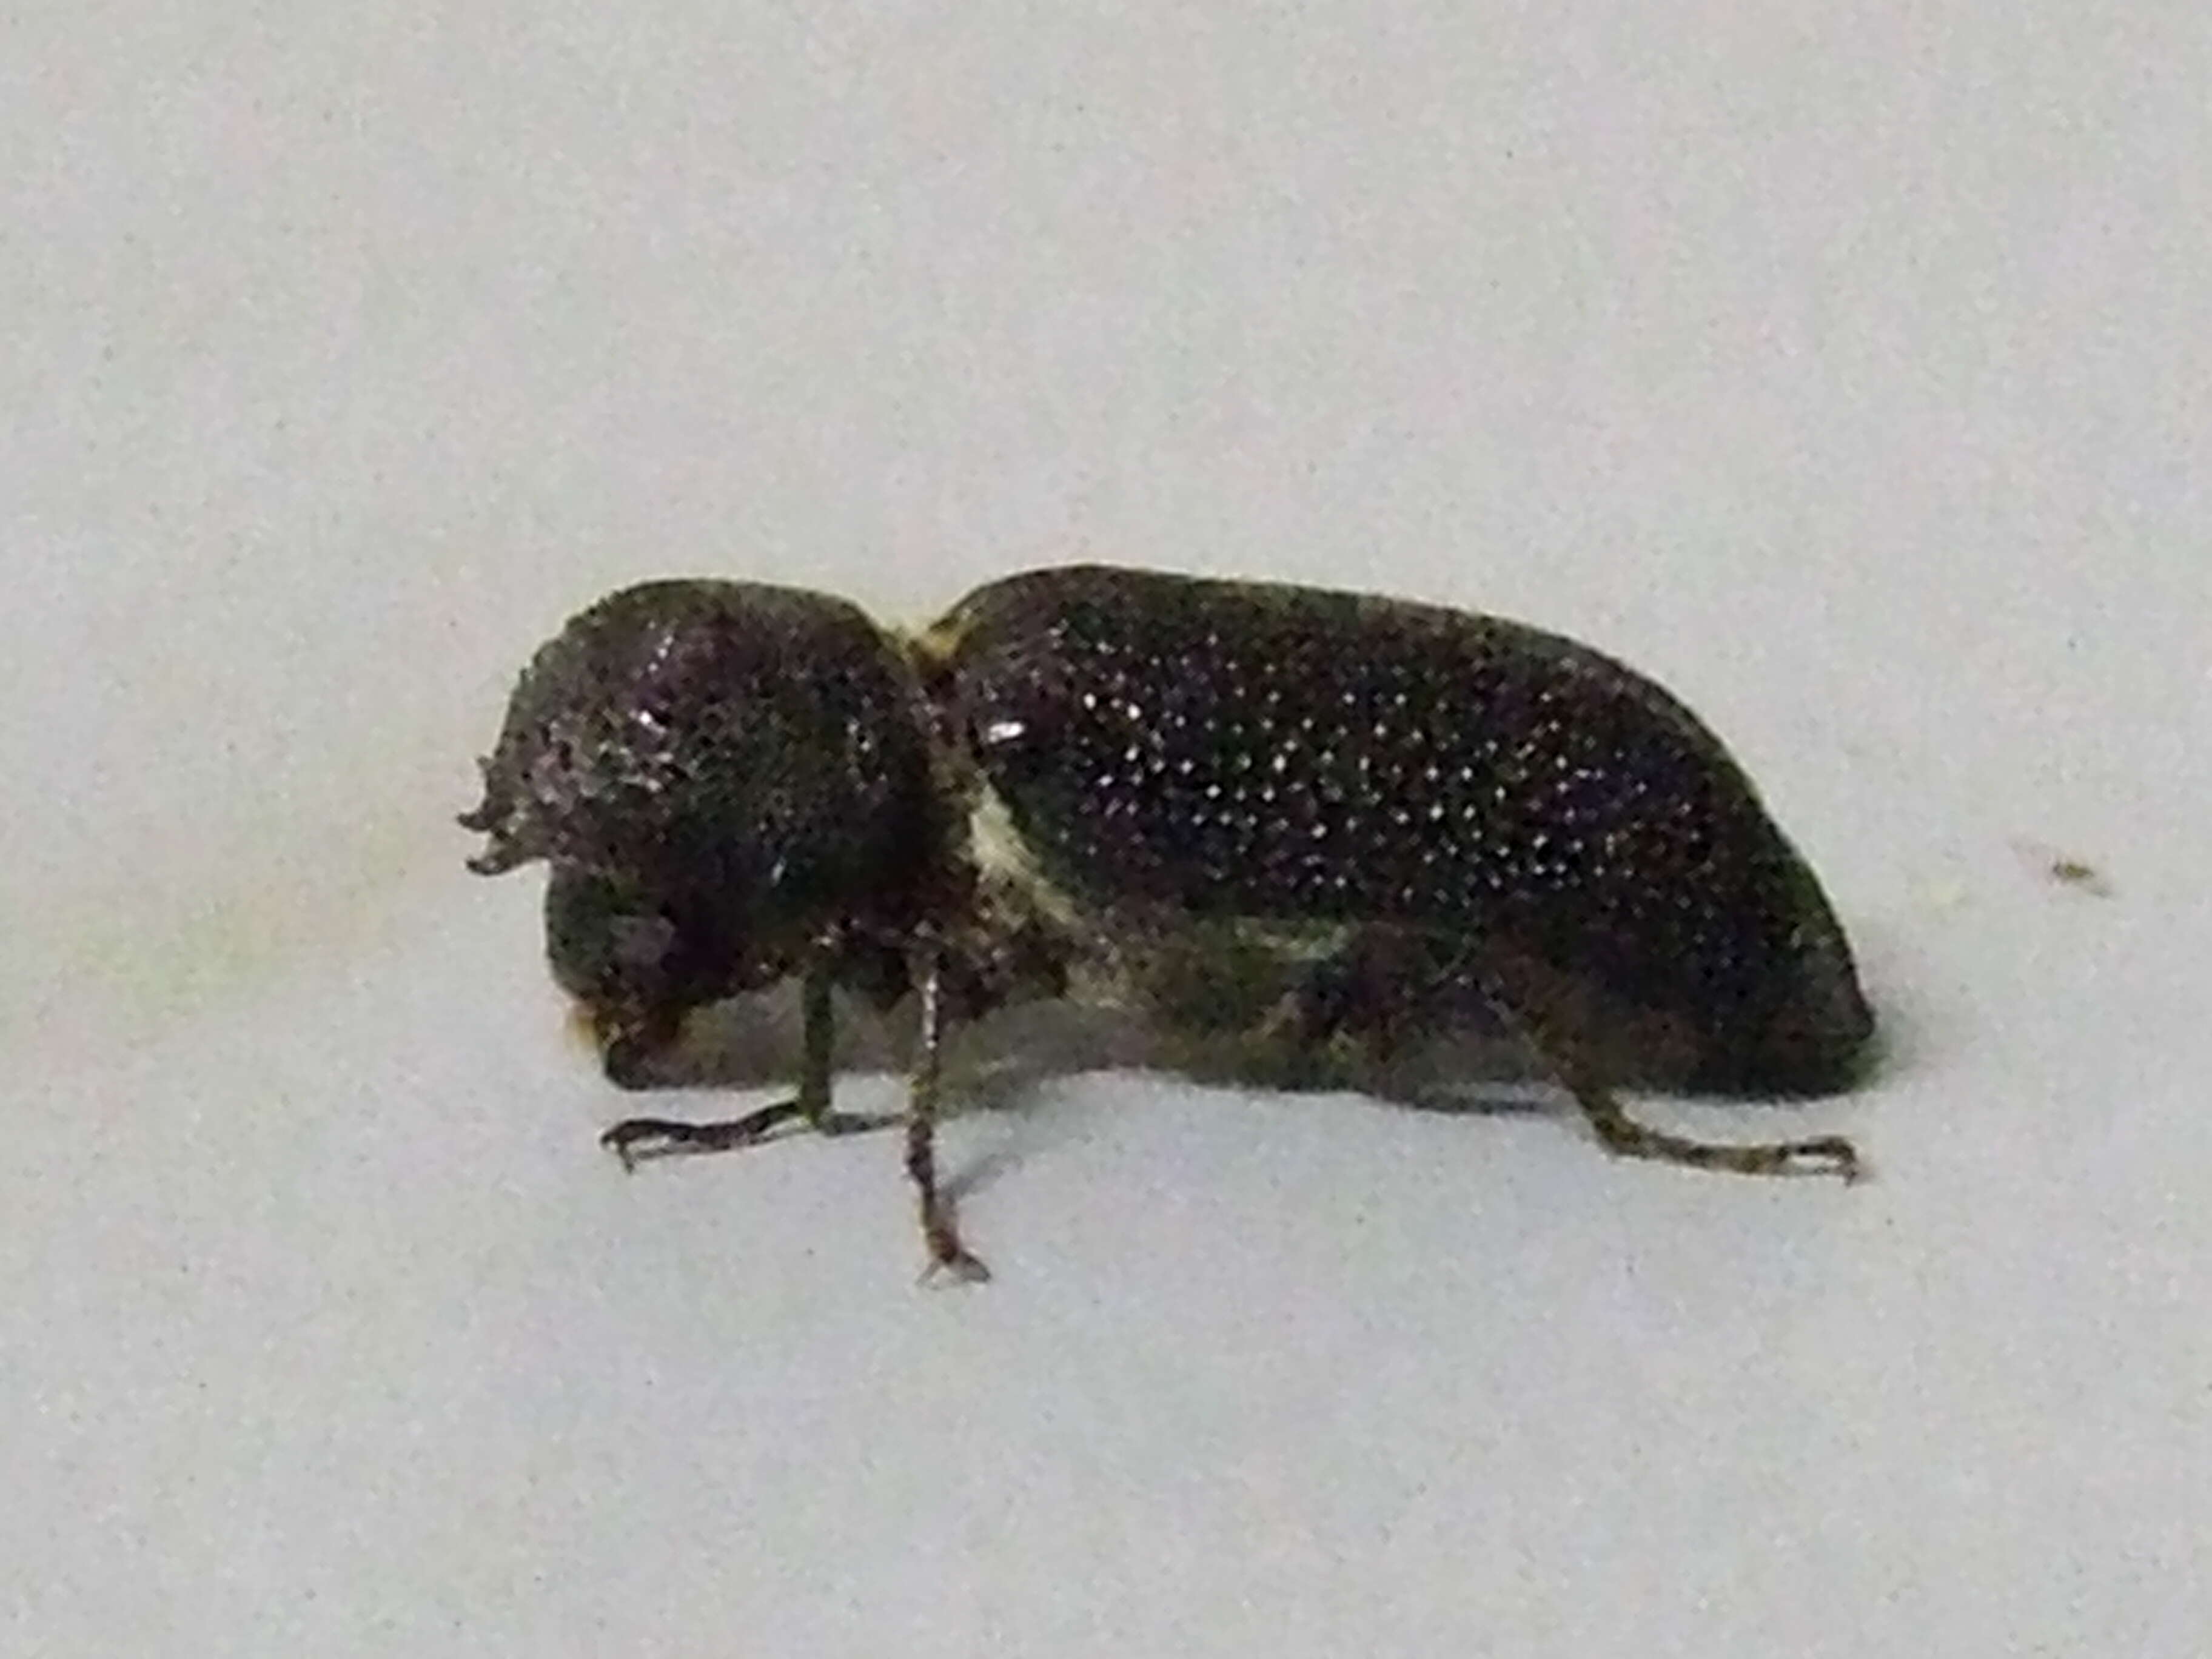 Image of horned powderpost beetles